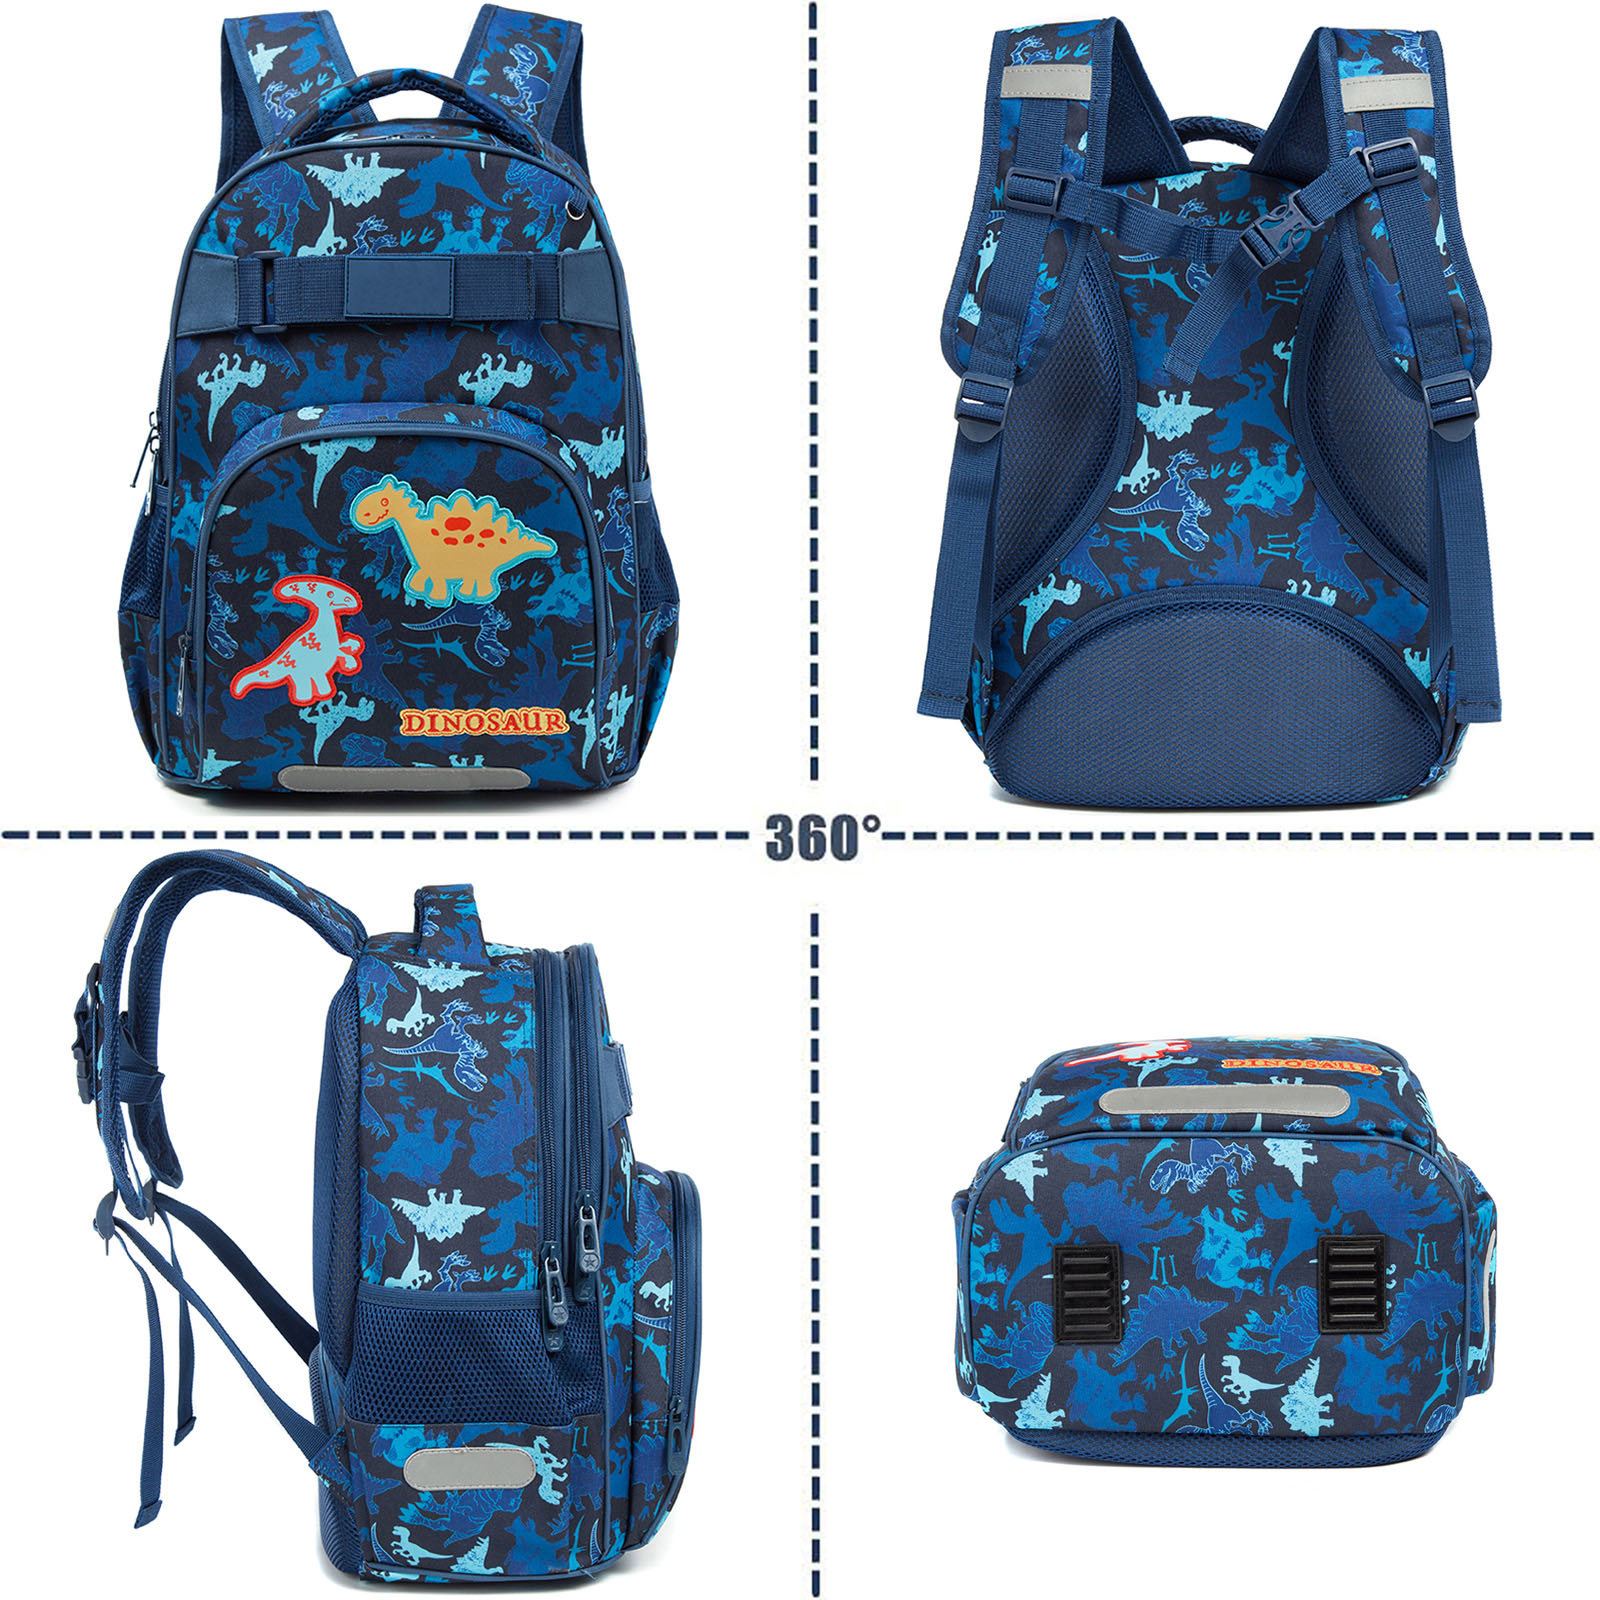 lvyH Kids School Backpack Unicorn Dinosaur Waterproof Schoolbag with Pencil Case Boys Girls Travel Outdoor,Blue - image 2 of 8